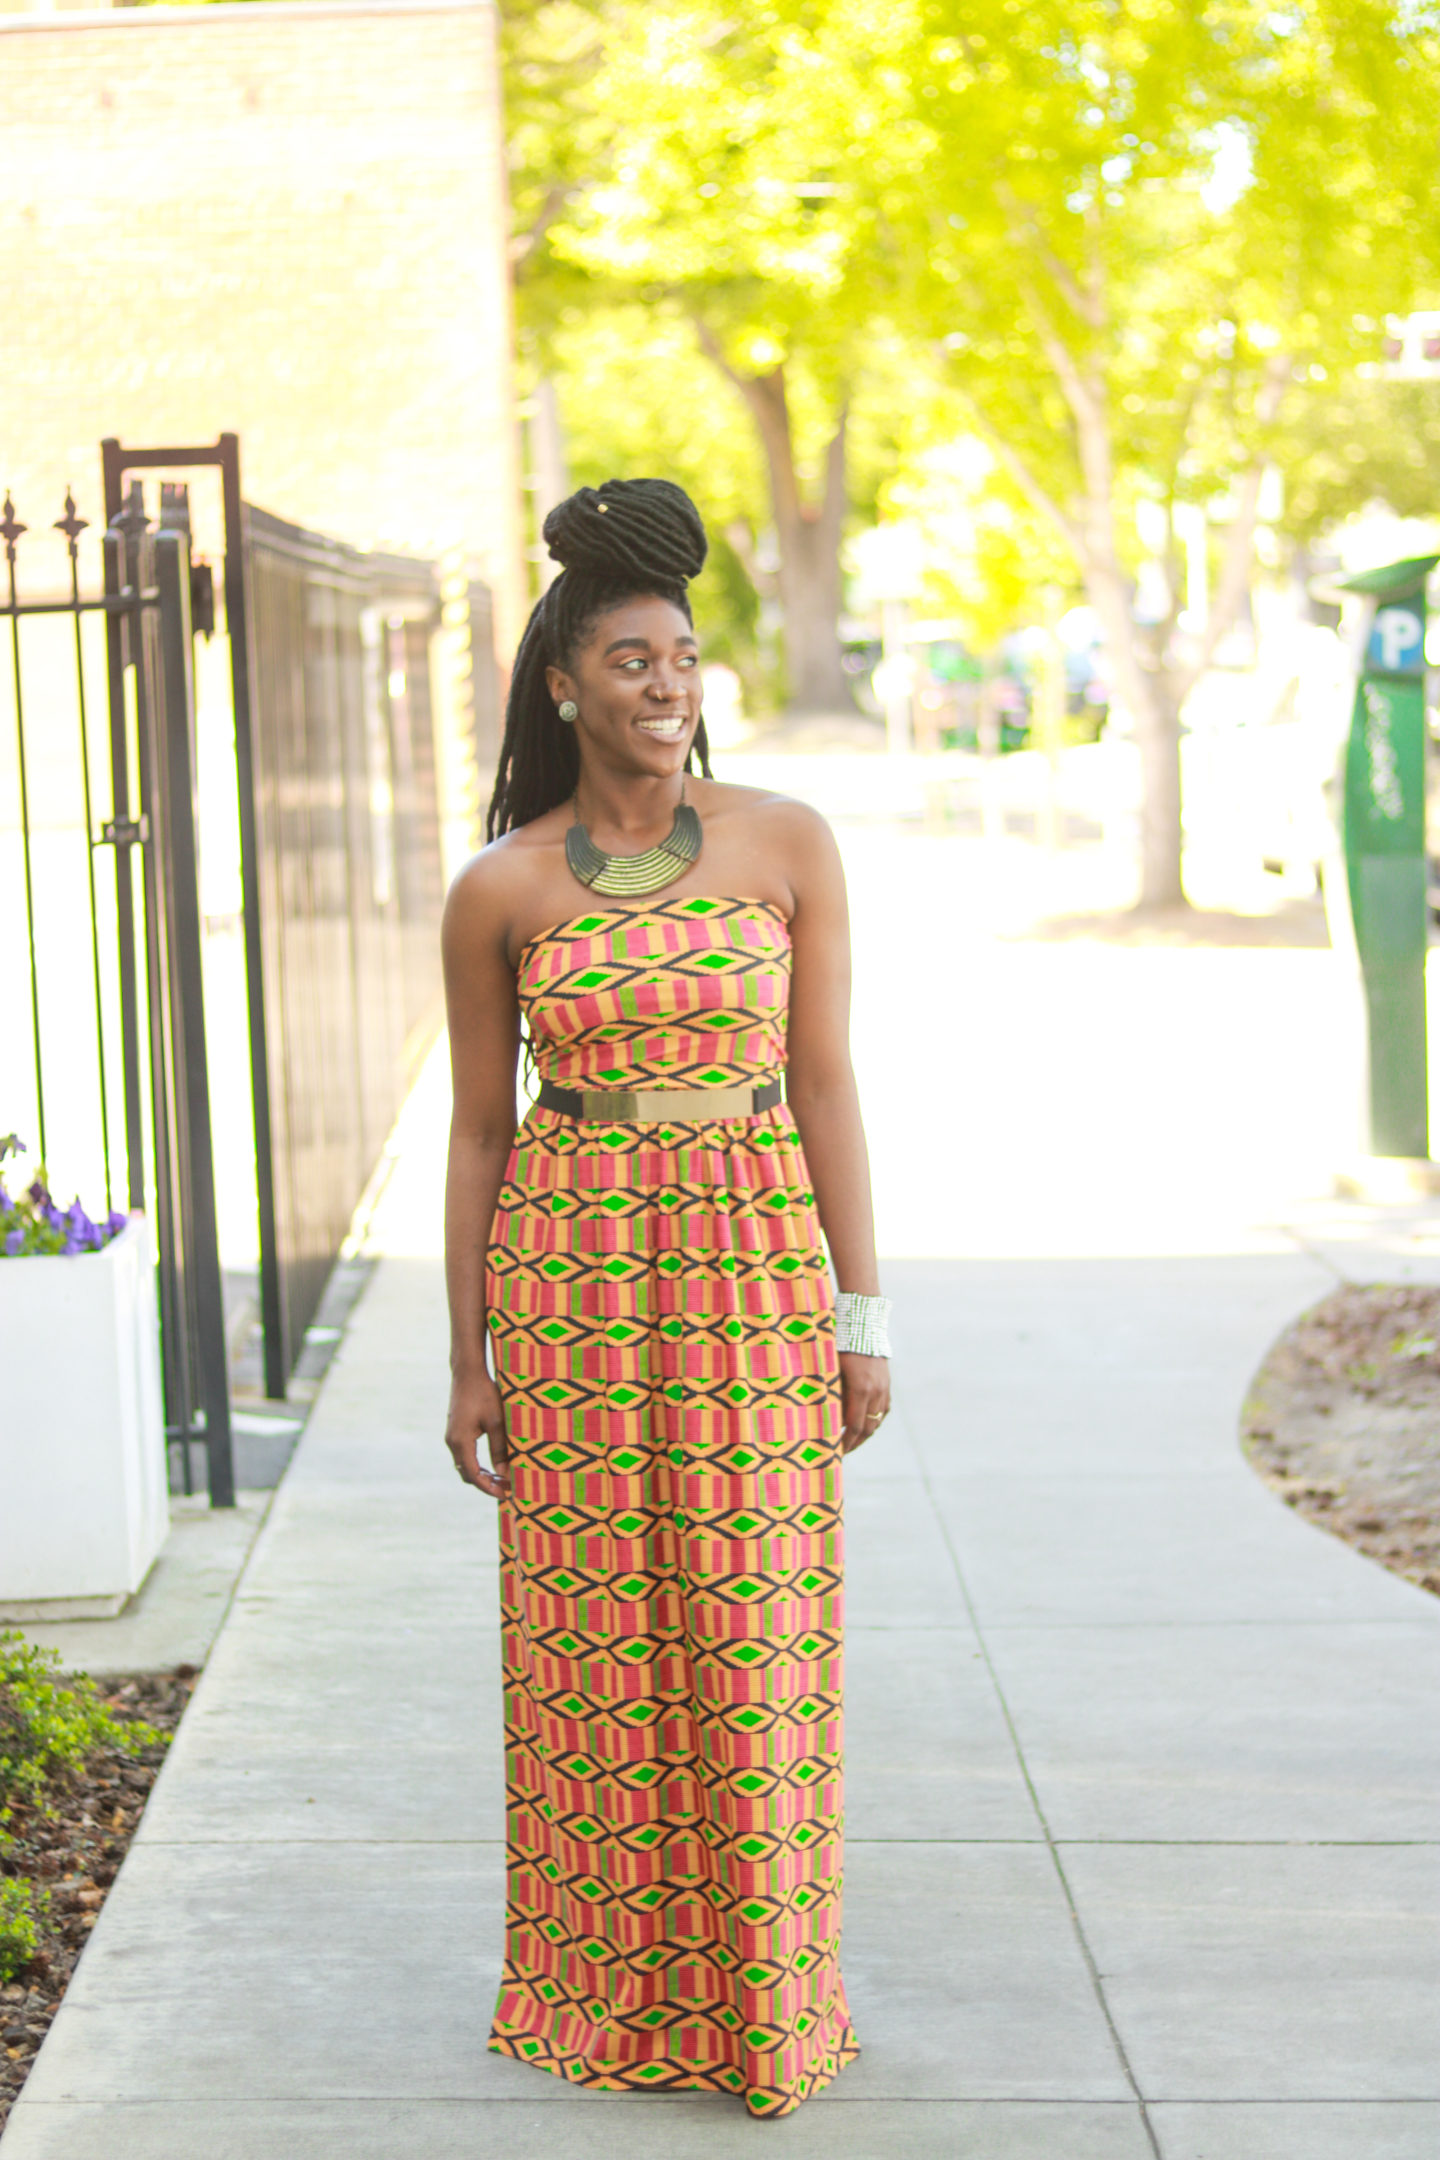 DIY Halter Top Maxi Dress Tutorial Ankara African Kente Knit Fabric Summer Fashion Spring Fashion